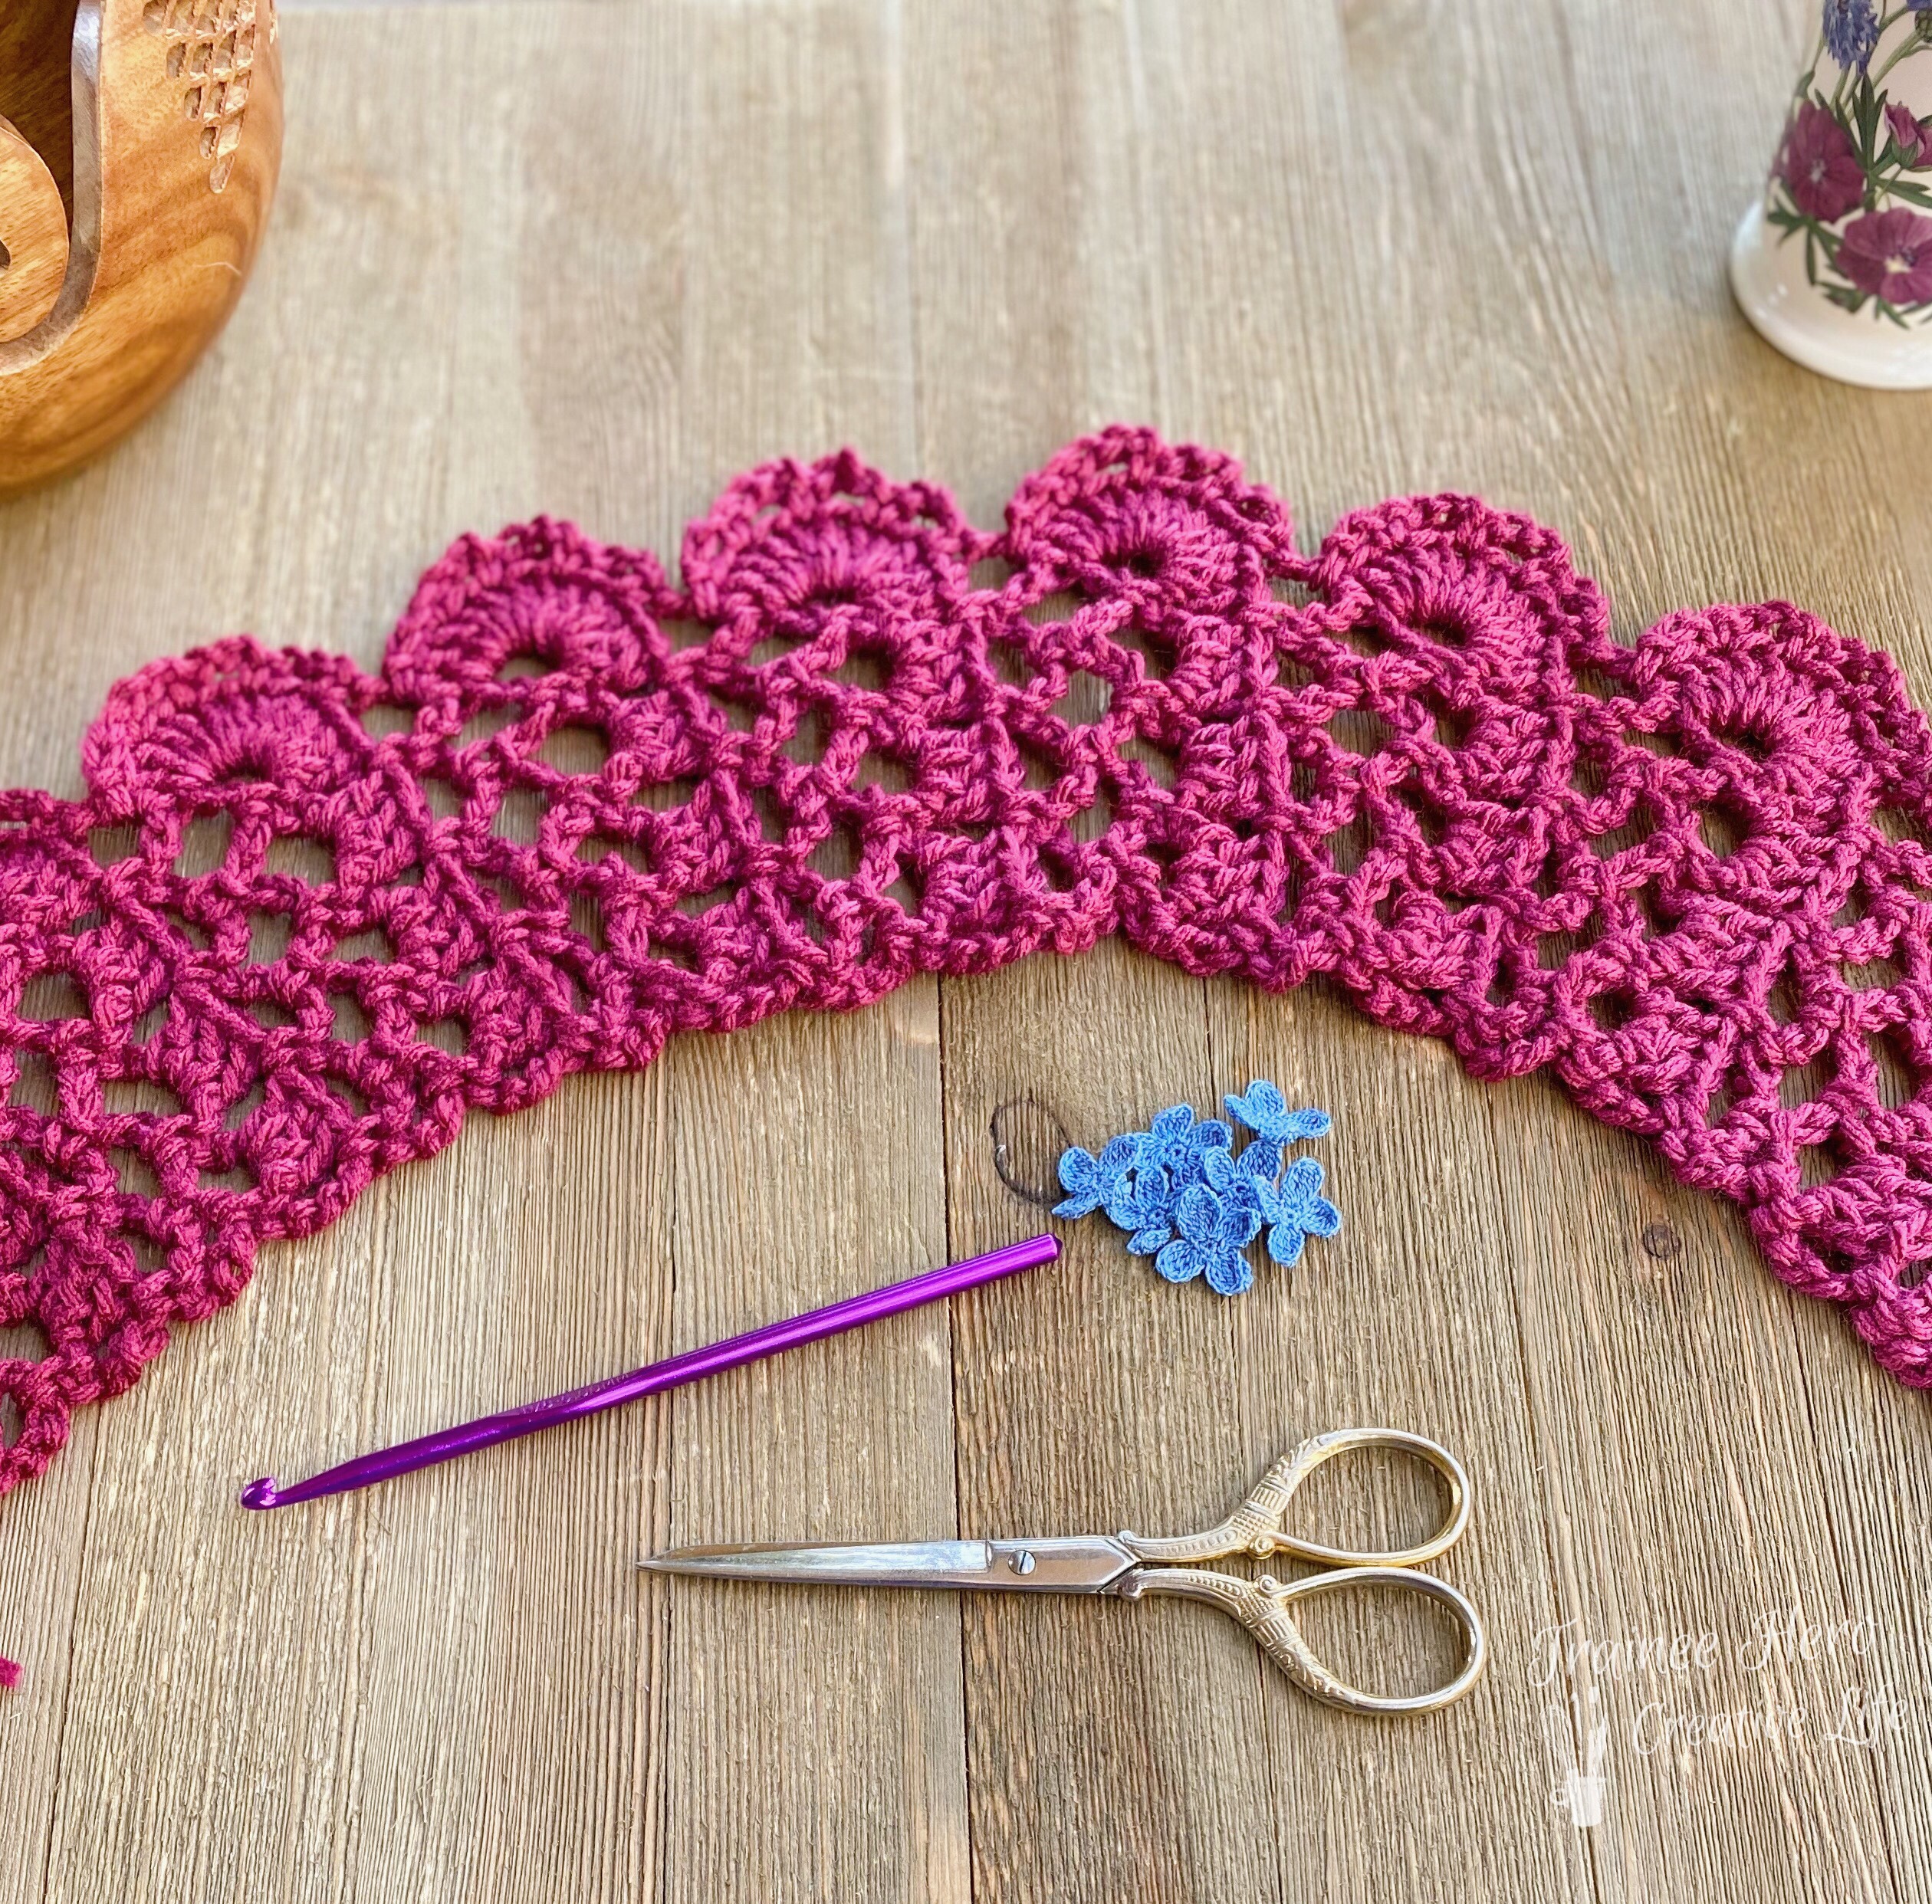 Plumeria Scarf, a crochet edging pattern scarf, showing asymmetry of pattern.